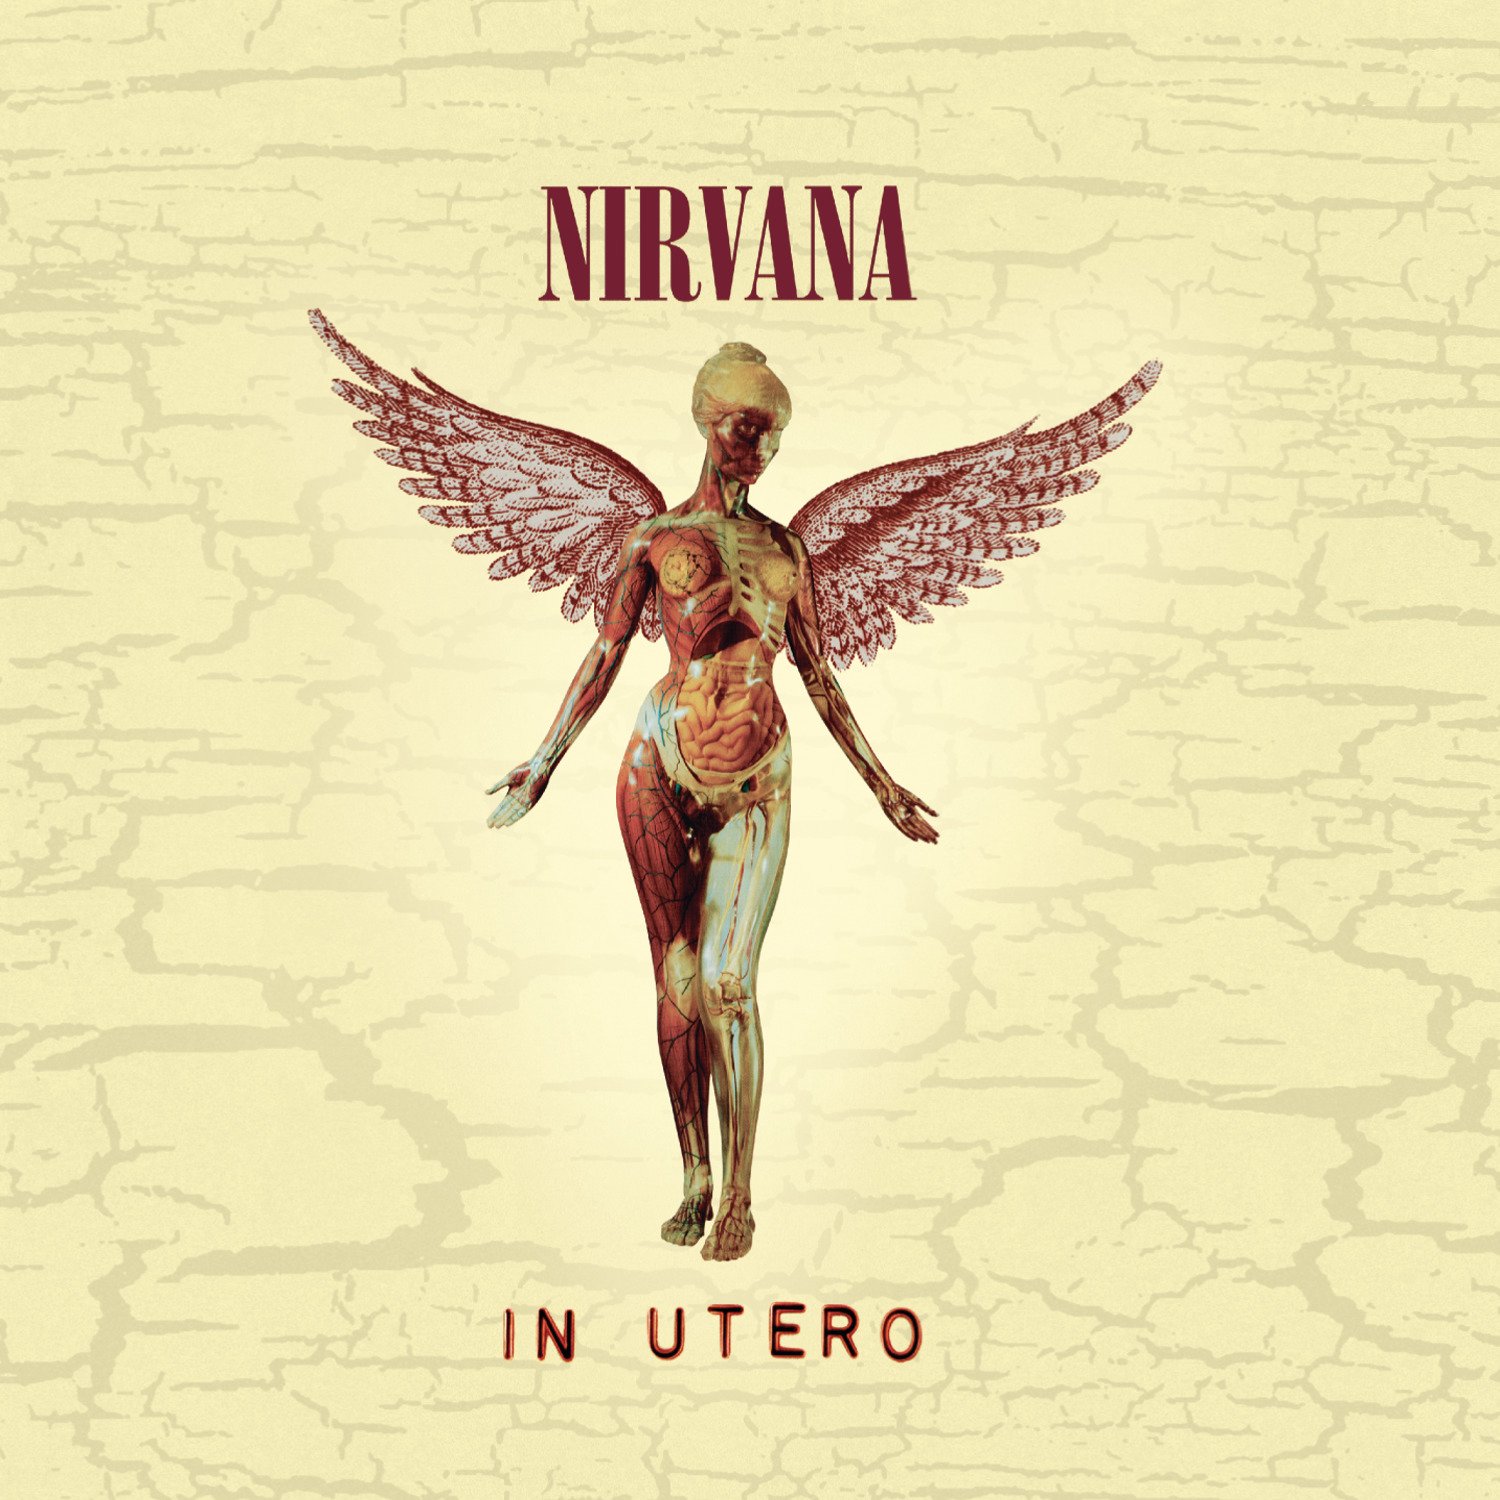 Nirvana-In Utero-Deluxe Edition-Remastered-2CD-FLAC-2013-FORSAKEN